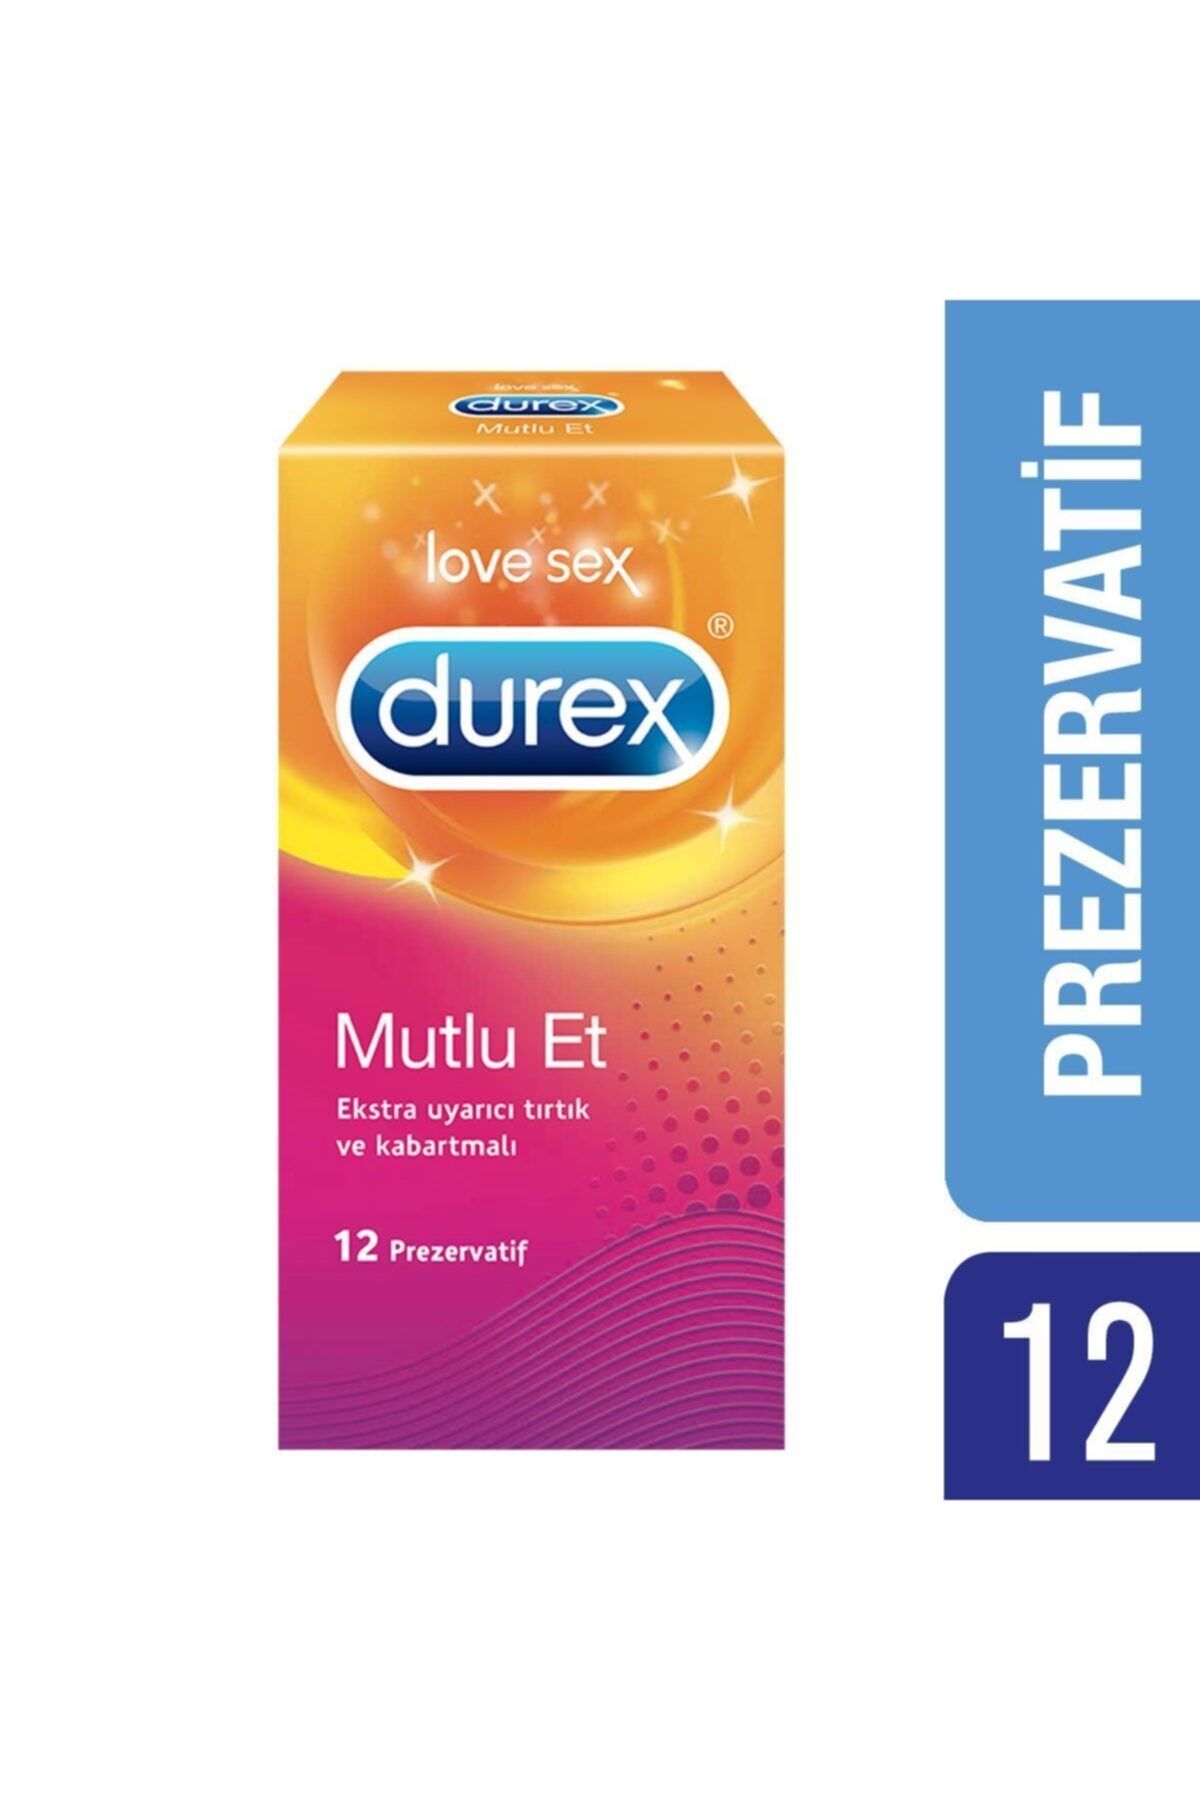 Durex Mutlu Et Prezervatif, 12'li